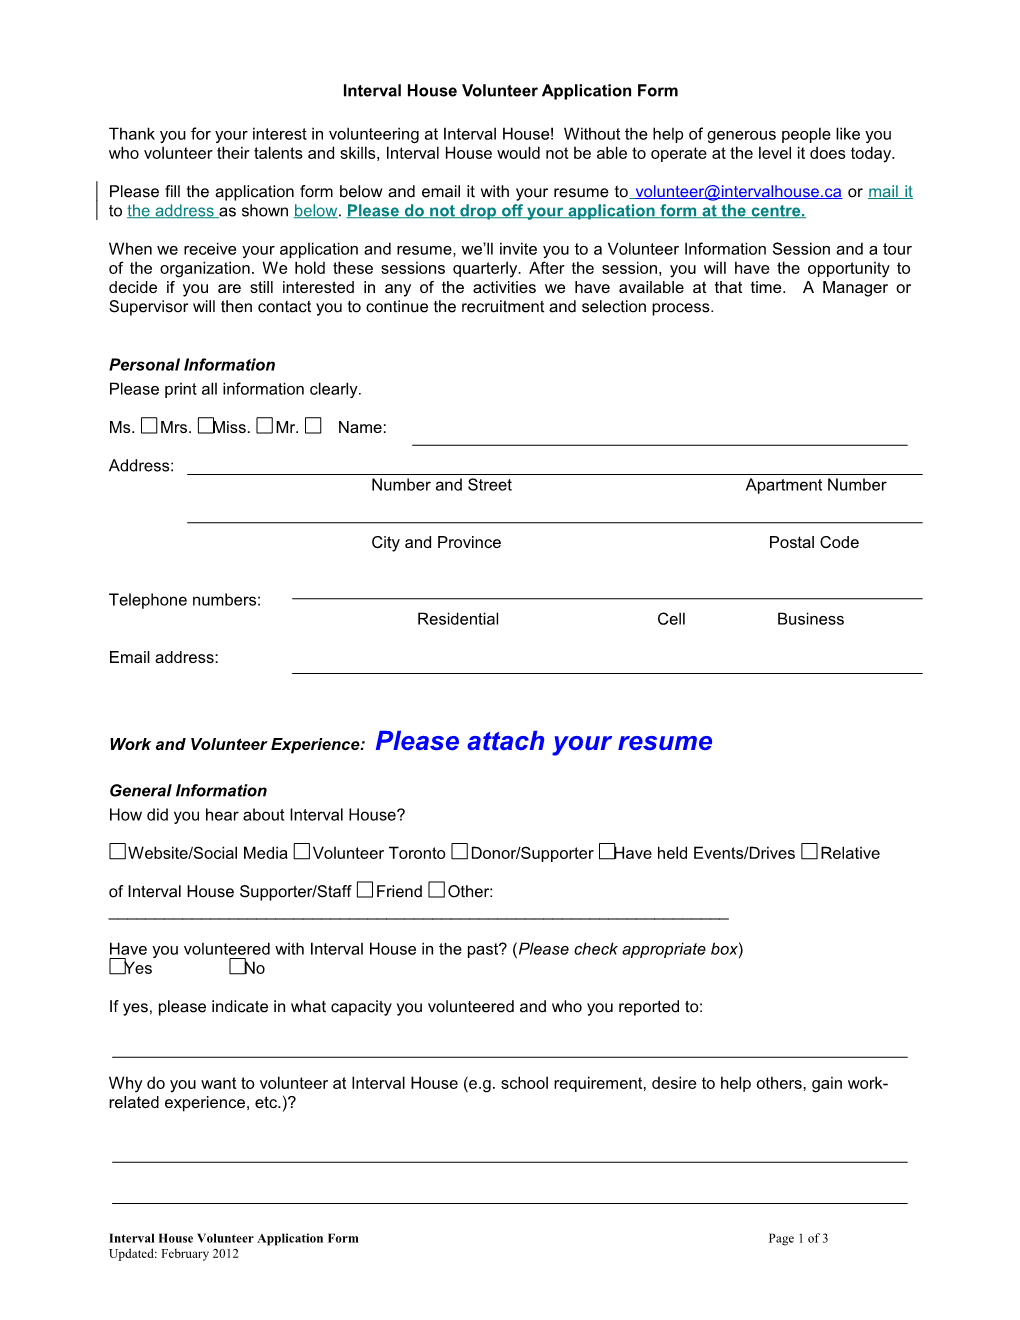 Interval House Volunteer Profile Form